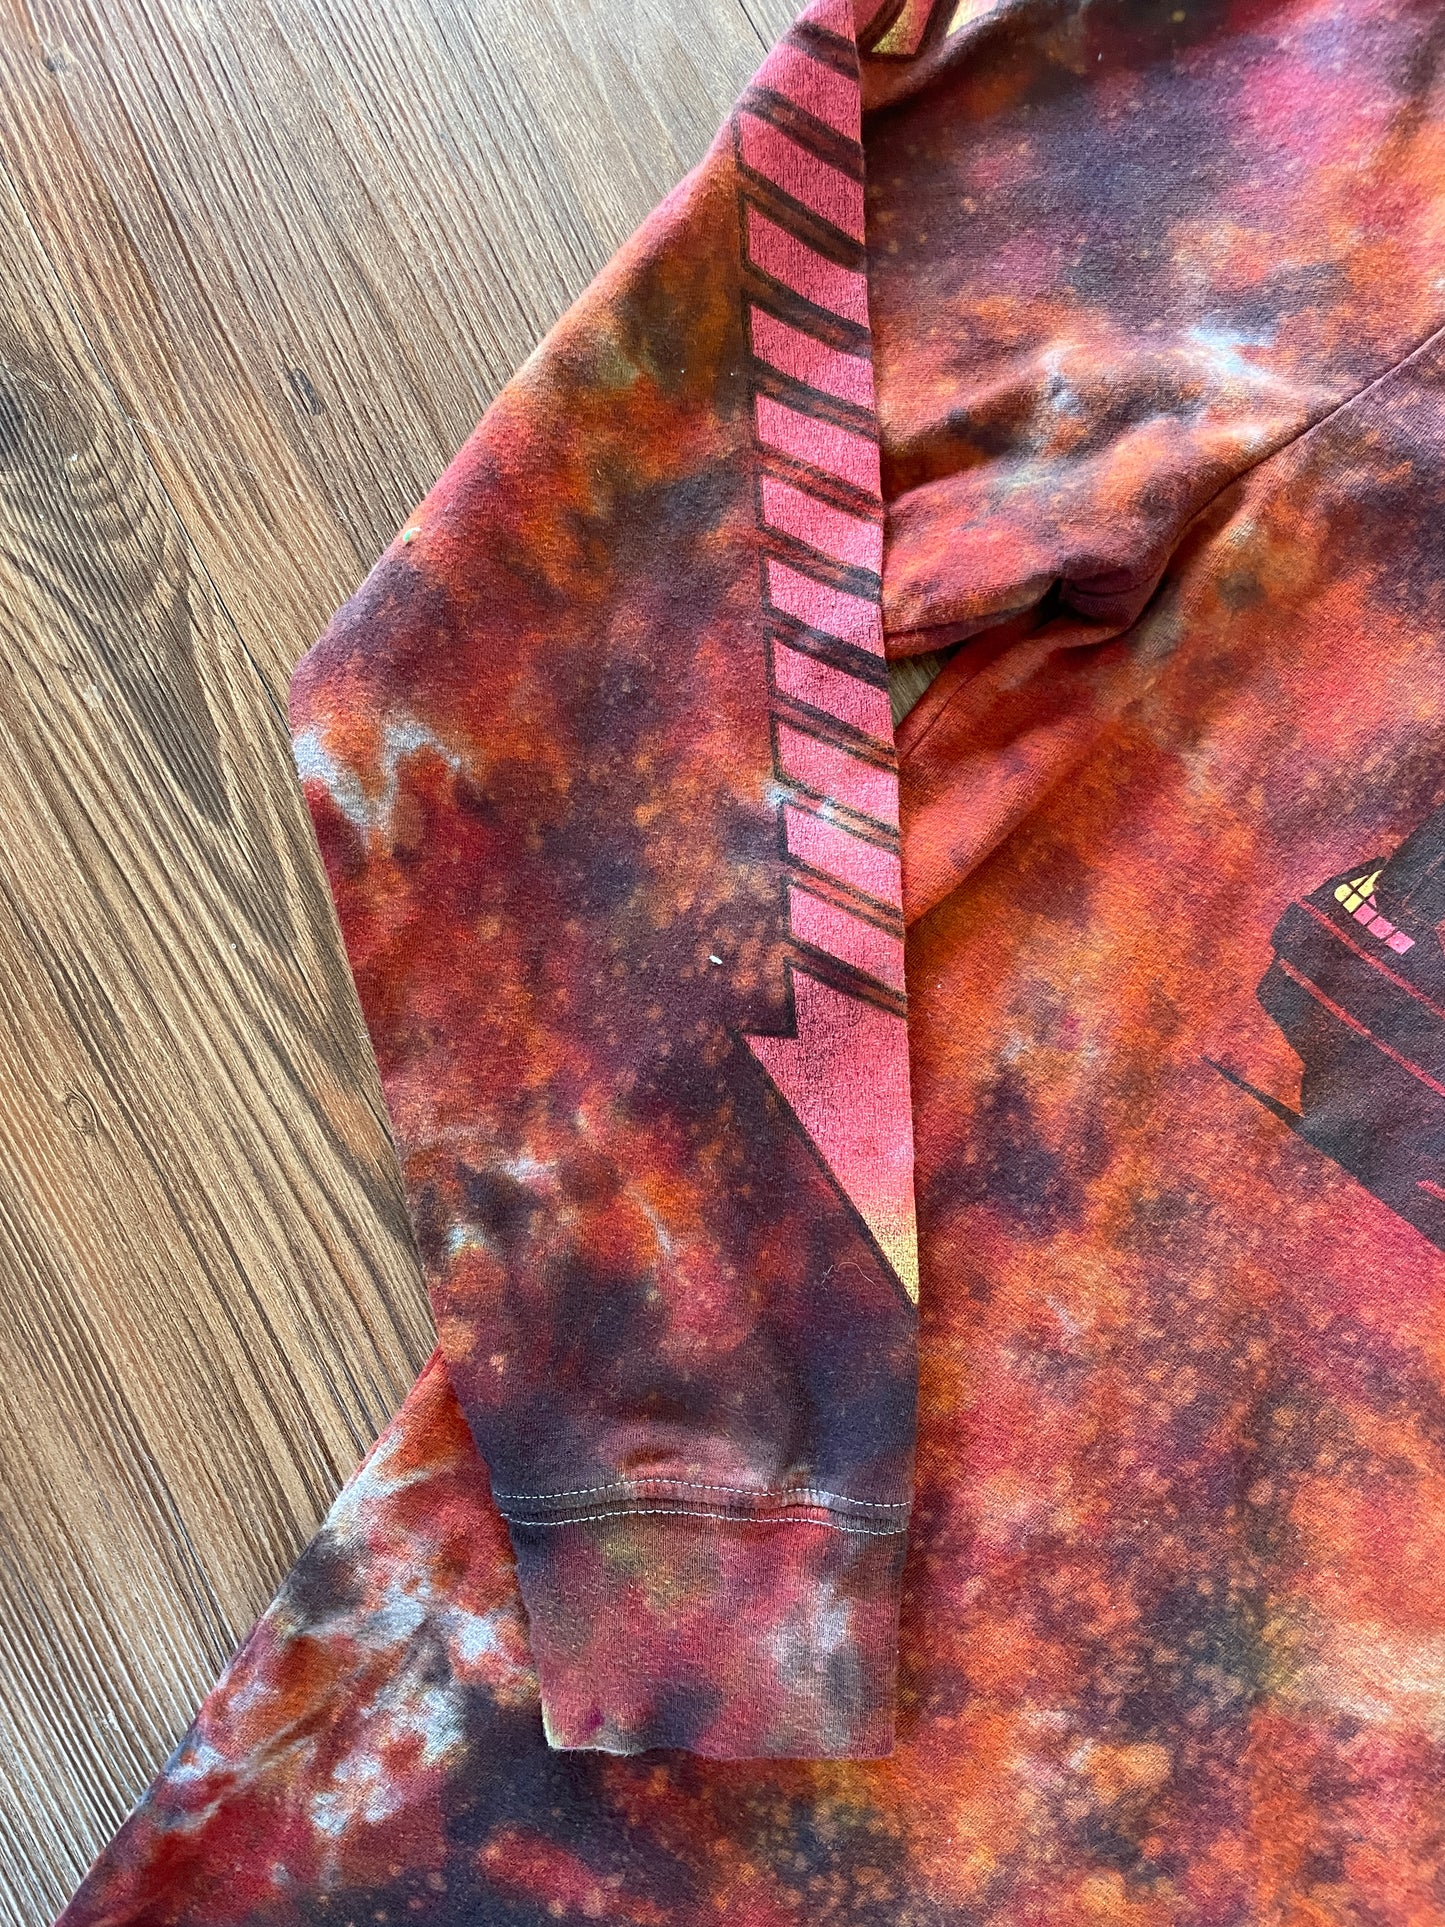 Medium Men’s Back to the Future DeLorean Handmade Tie Dye Long Sleeve T-Shirt | Red, Orange, and Black Fire Dye Tie Dye Long Sleeve